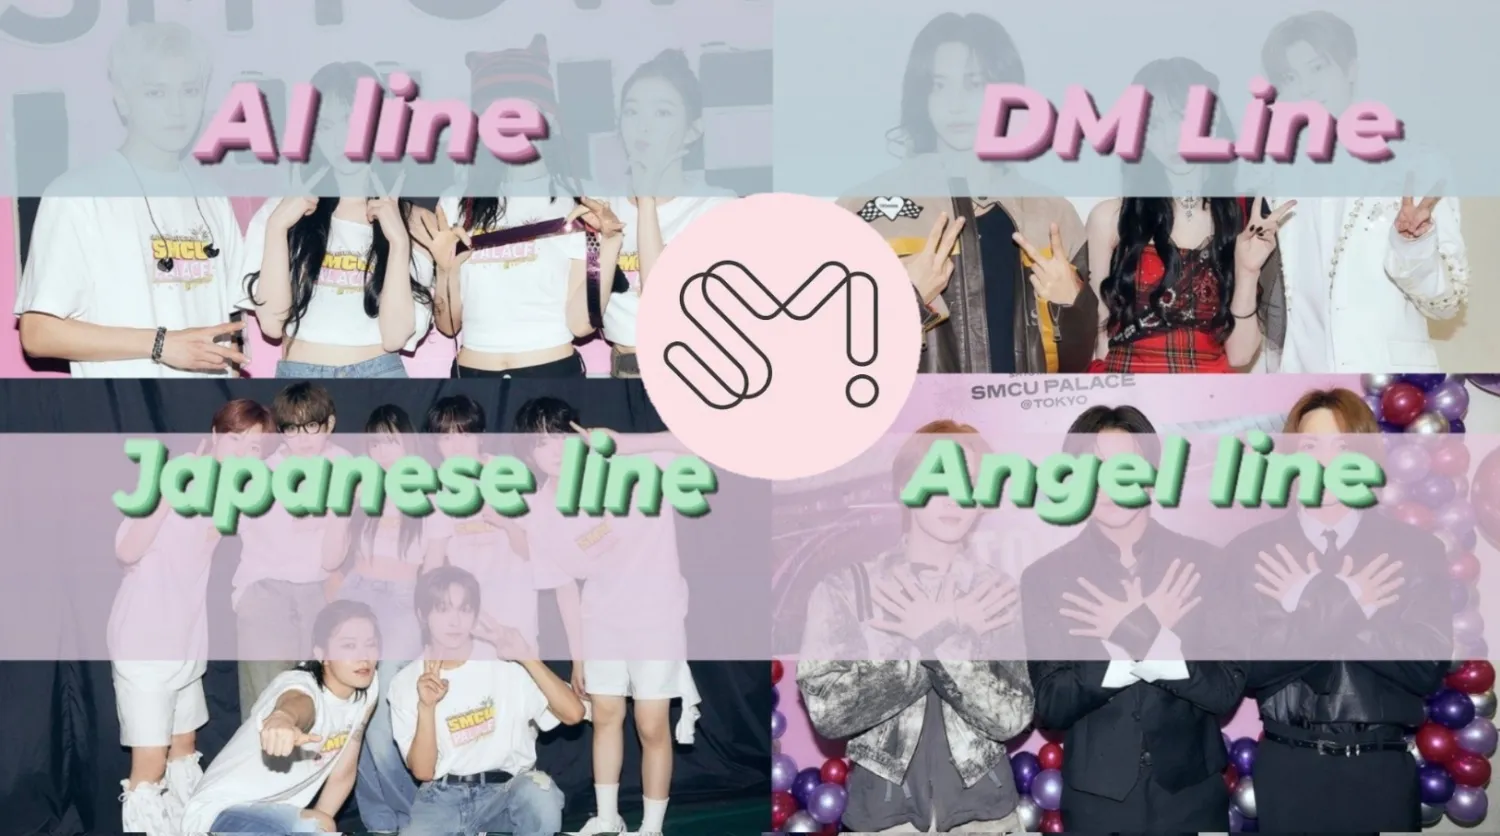 SM 娛樂在這些照片中介紹藝人“Lines”：從“AI”到“DM”Line Loop